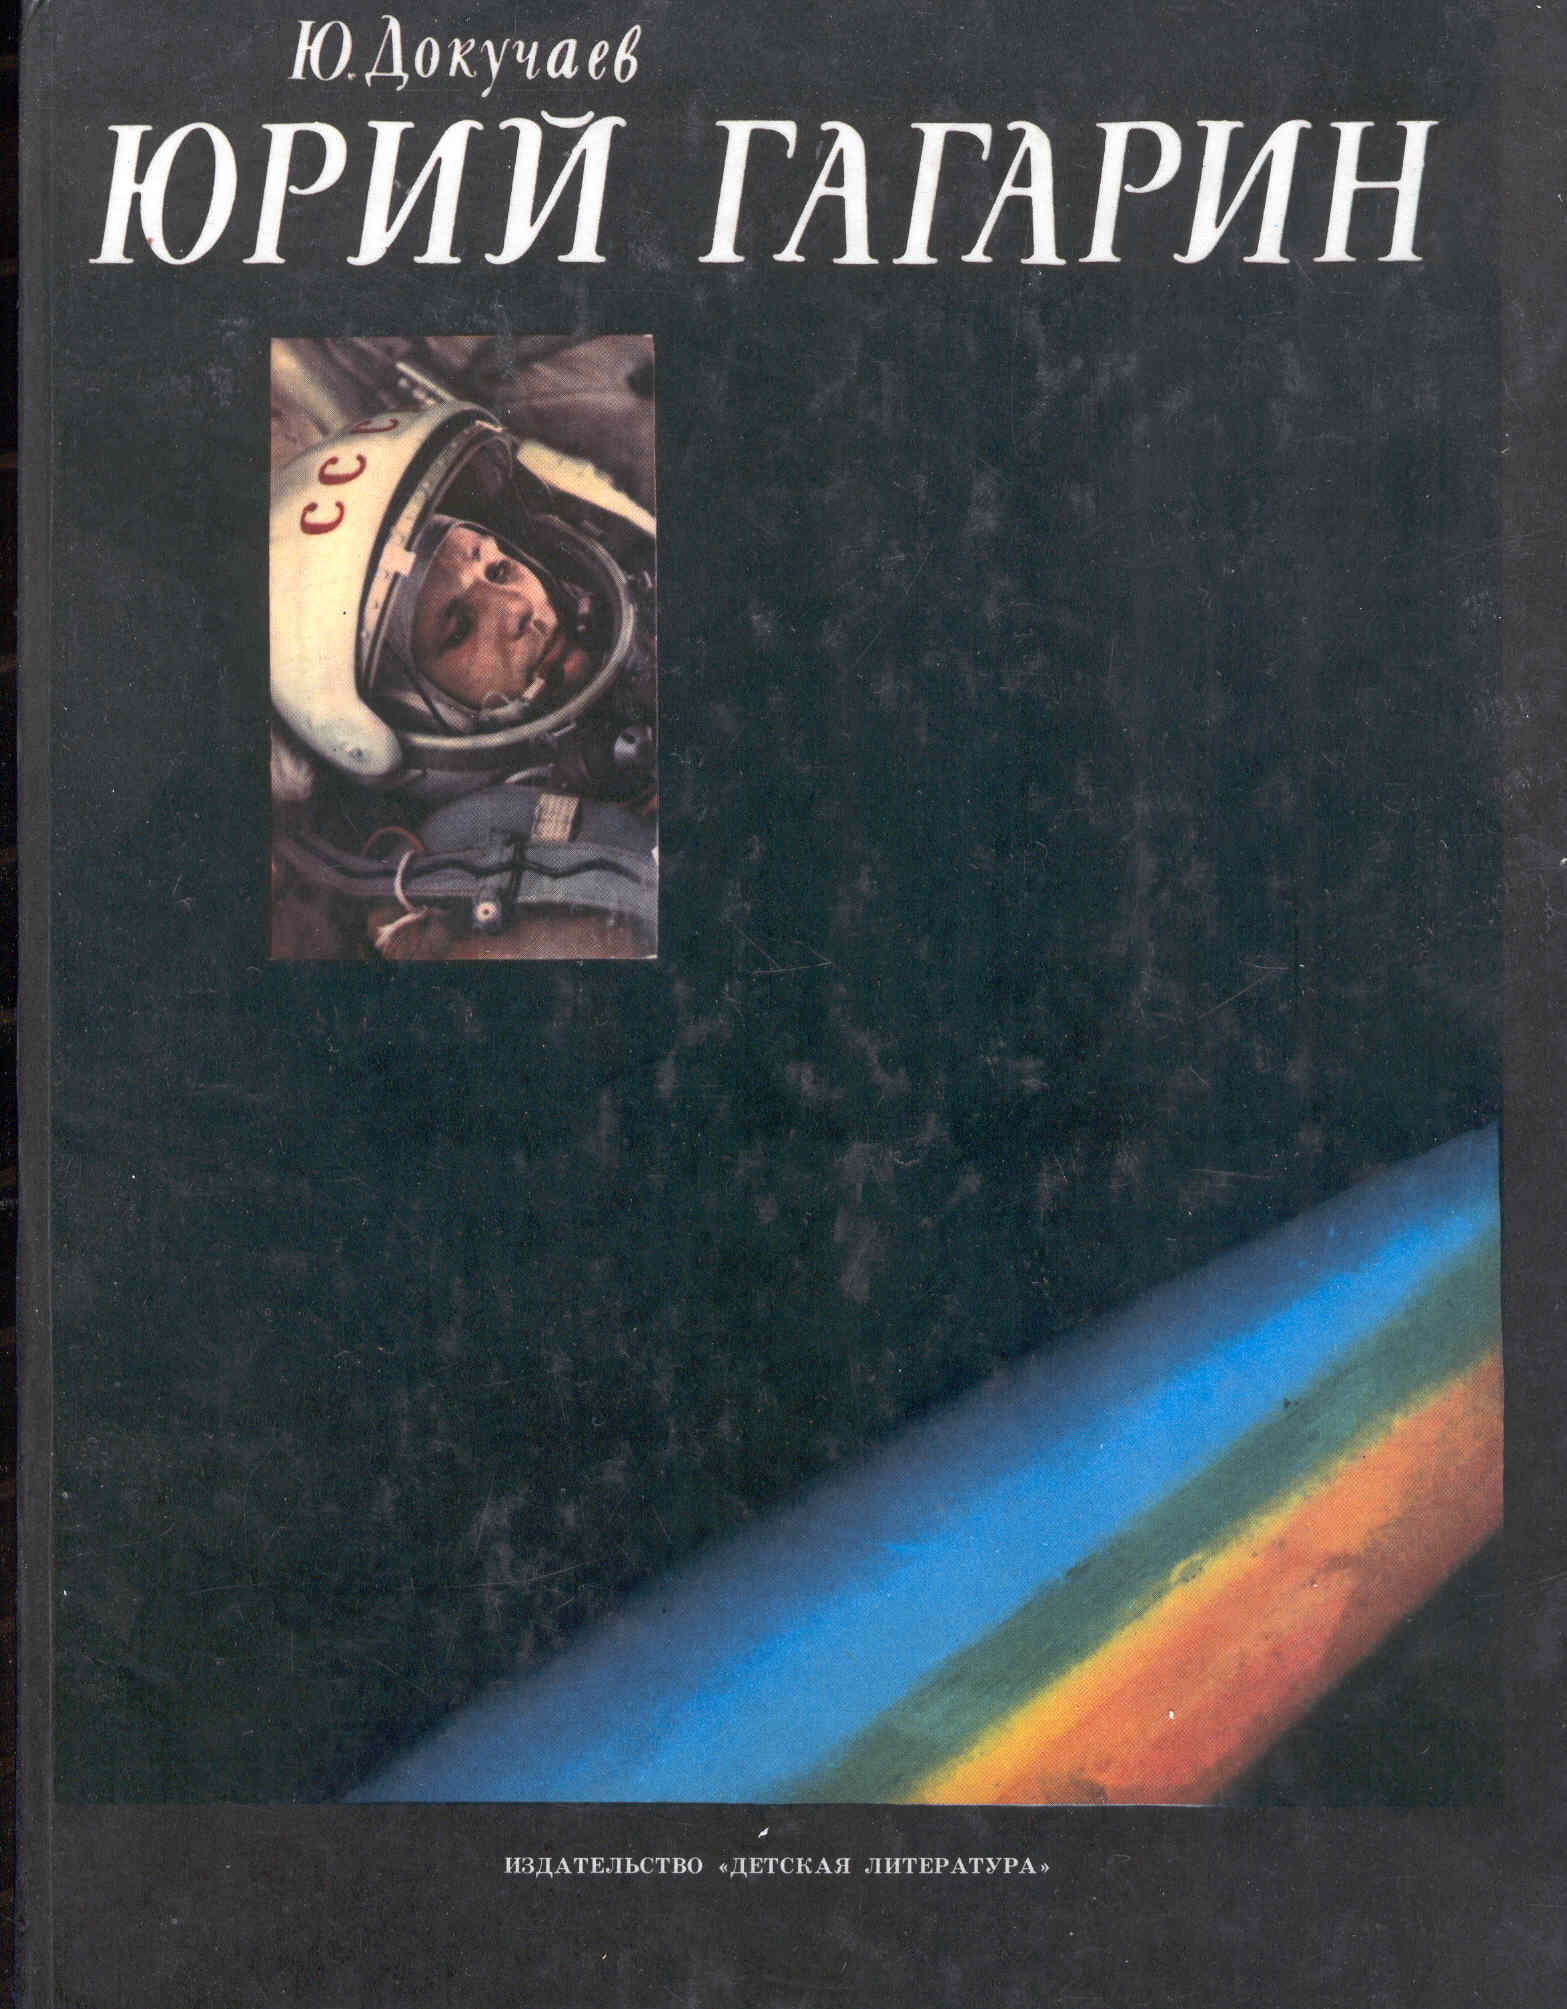 # cb190 Seven cosmonauts autographed book about Yuri Gagarin - Click Image to Close